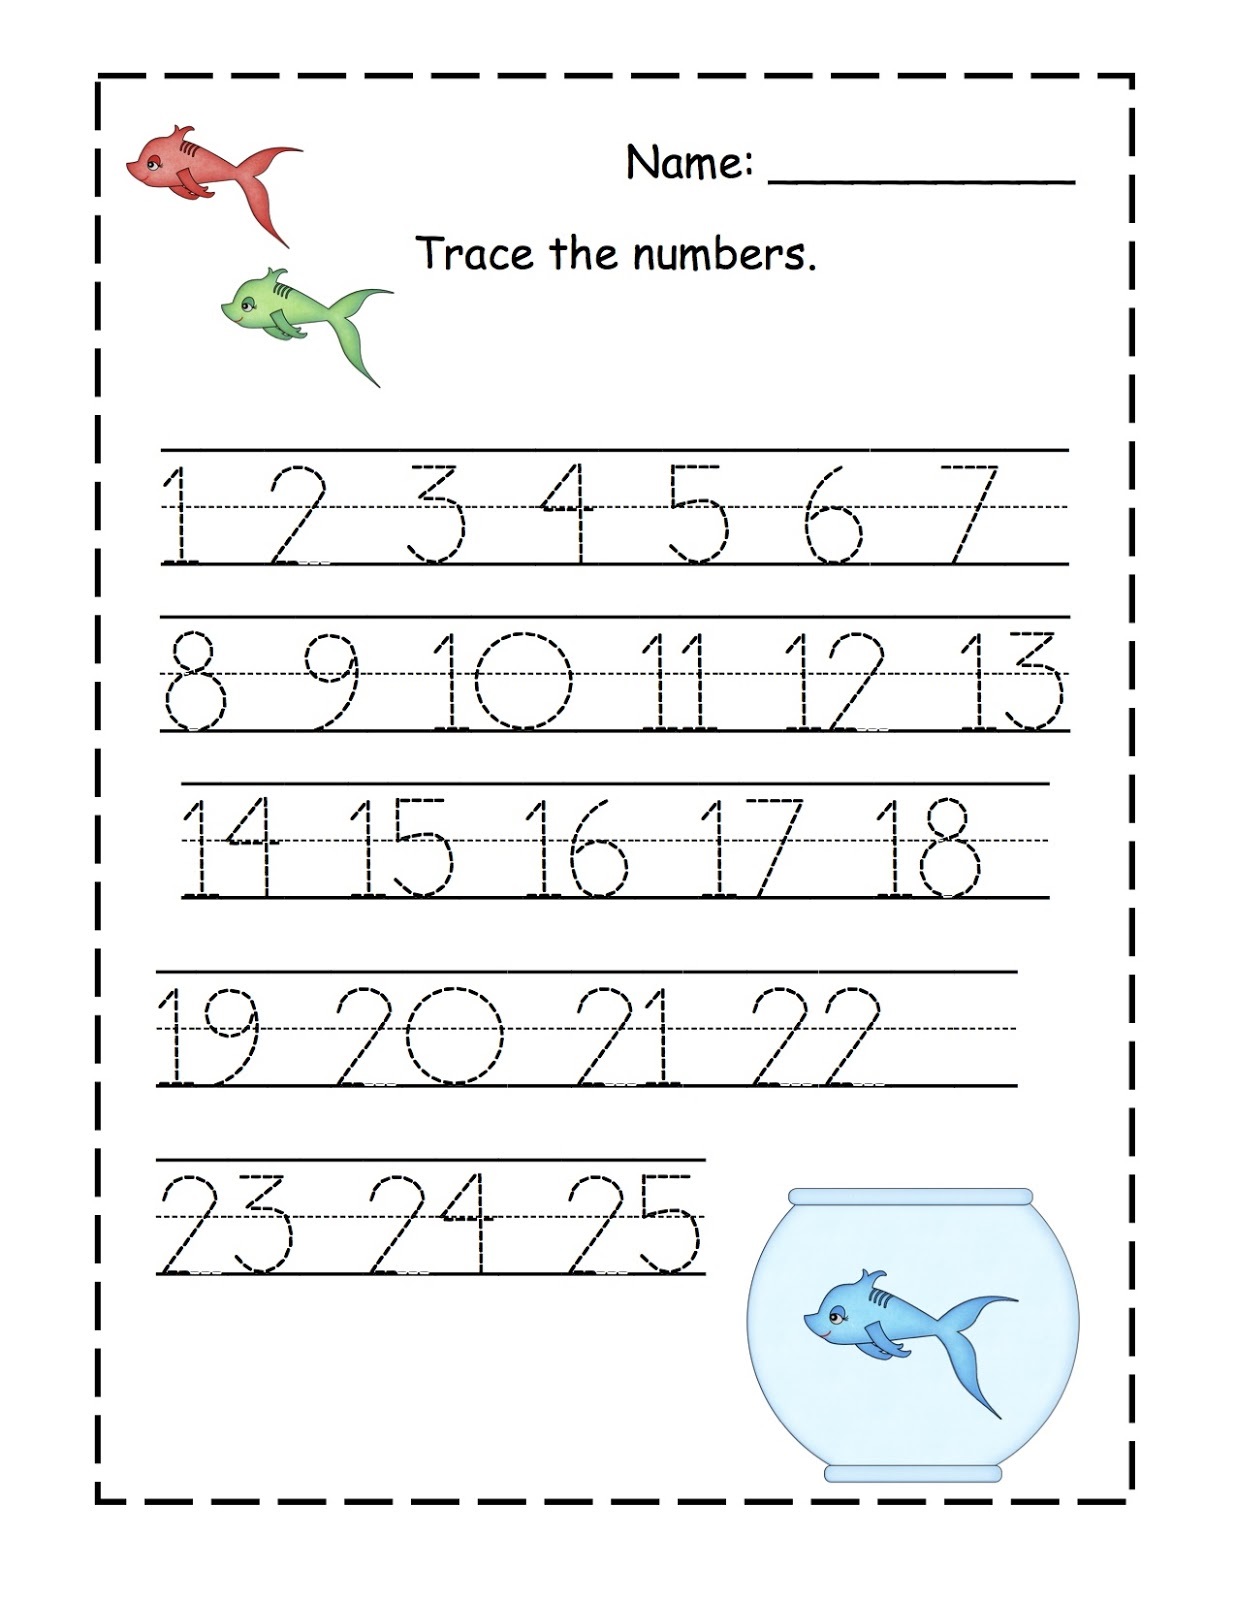 tracing-numbers-worksheets-for-kindergarten